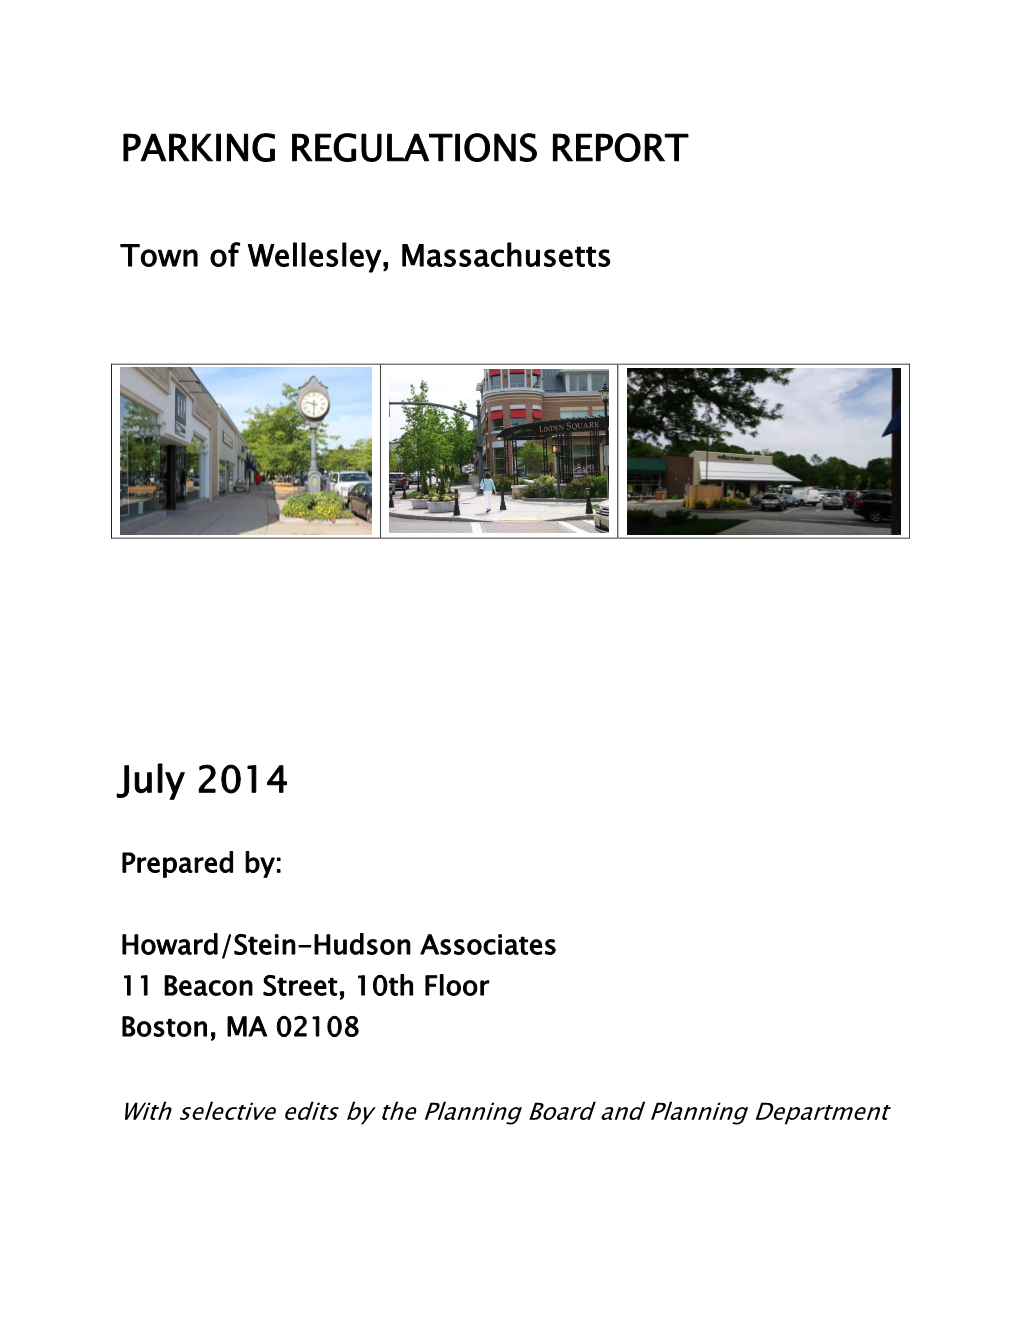 PARKING REGULATIONS REPORT July 2014